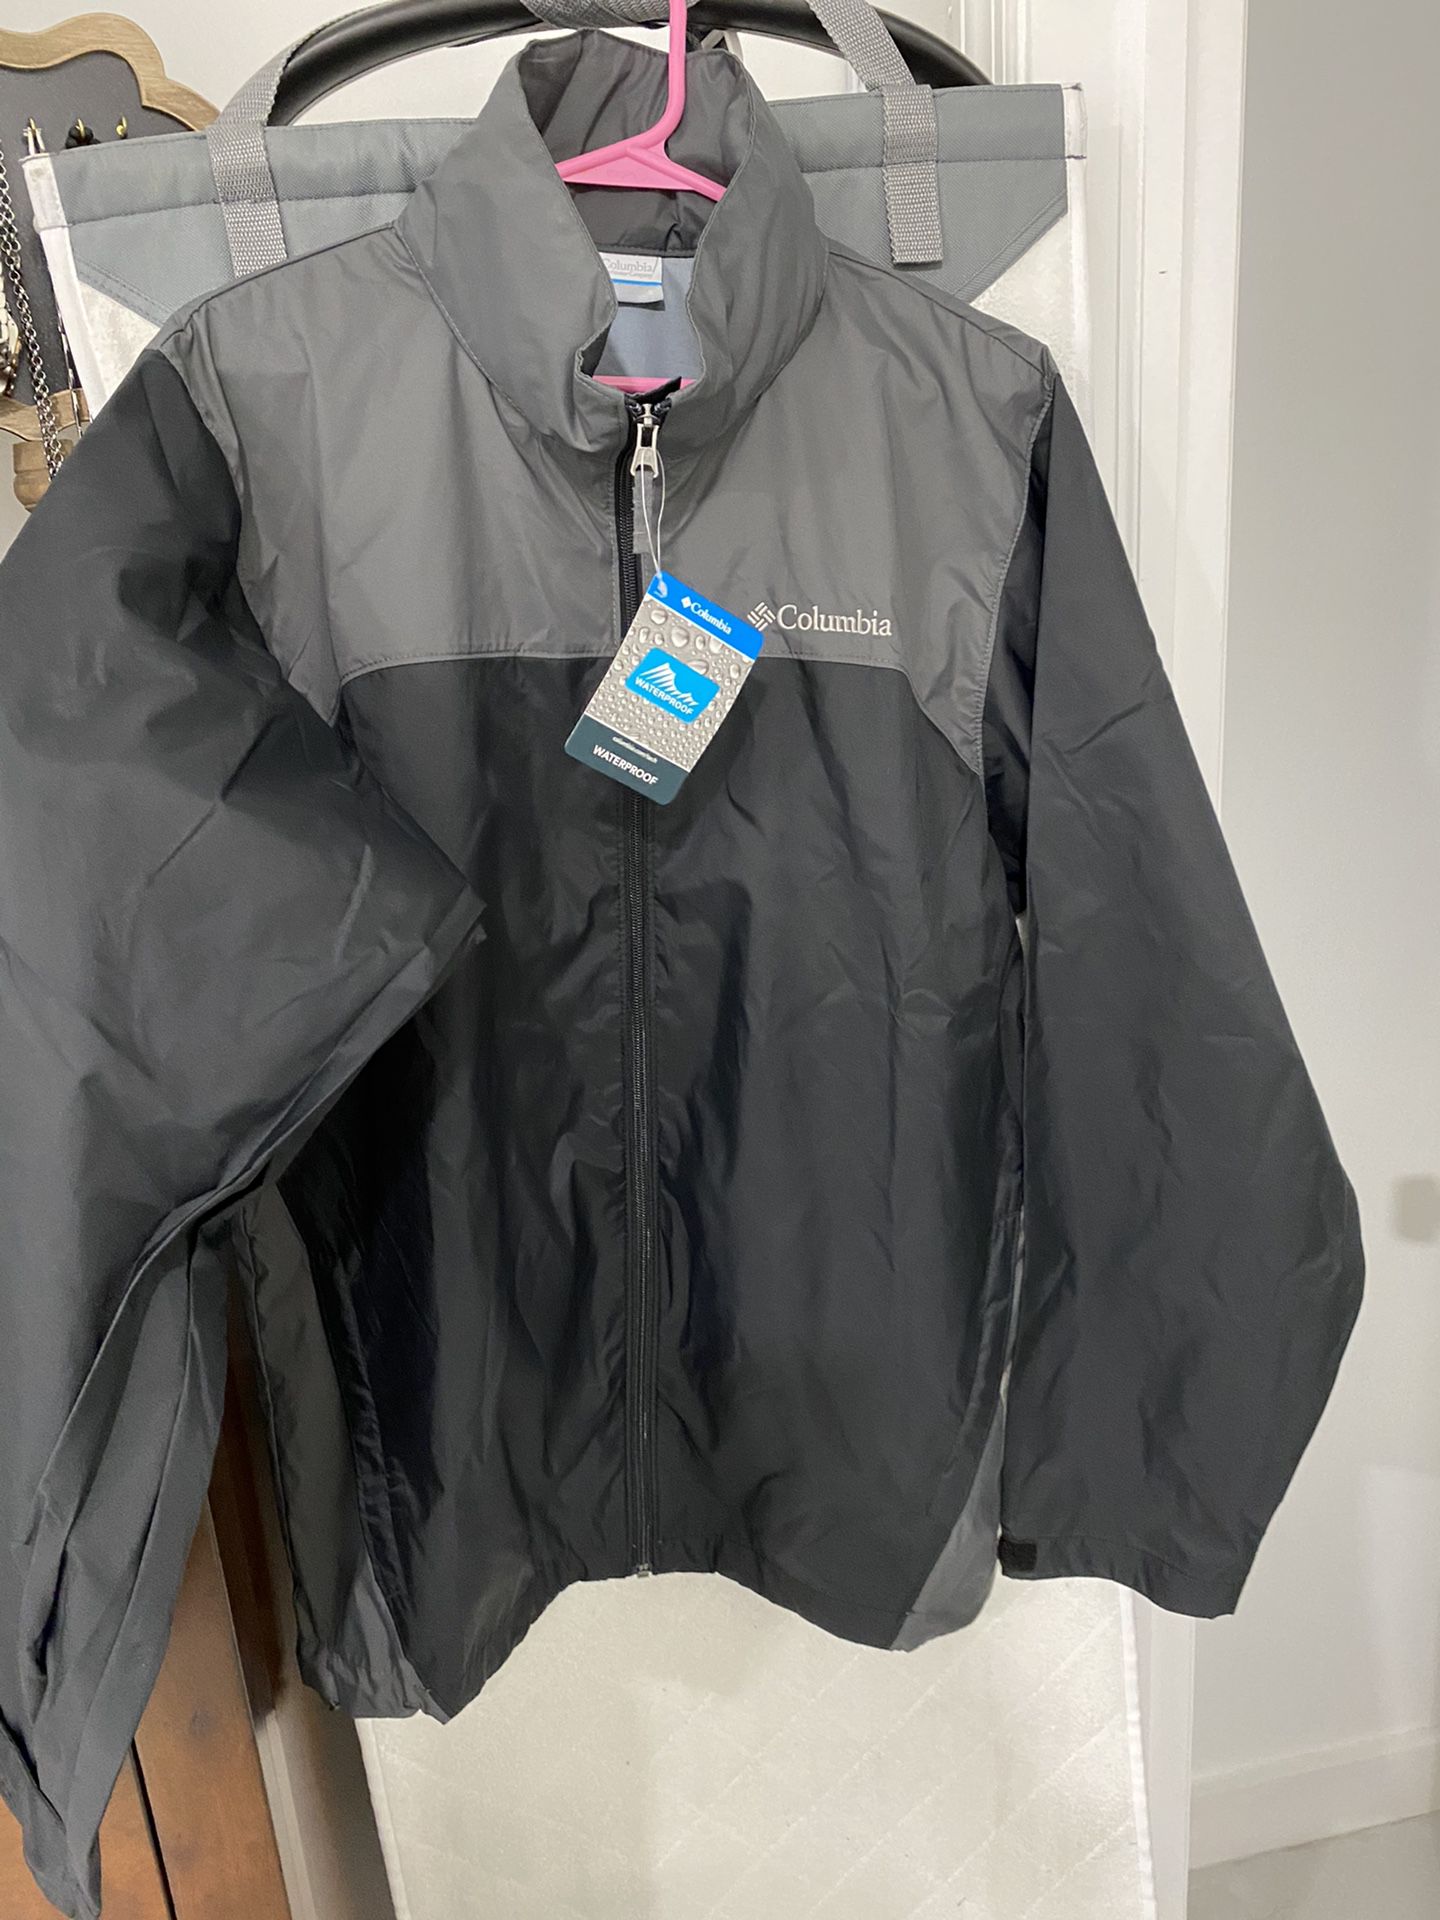 Columbia rain Jacket- Brand New-size Small